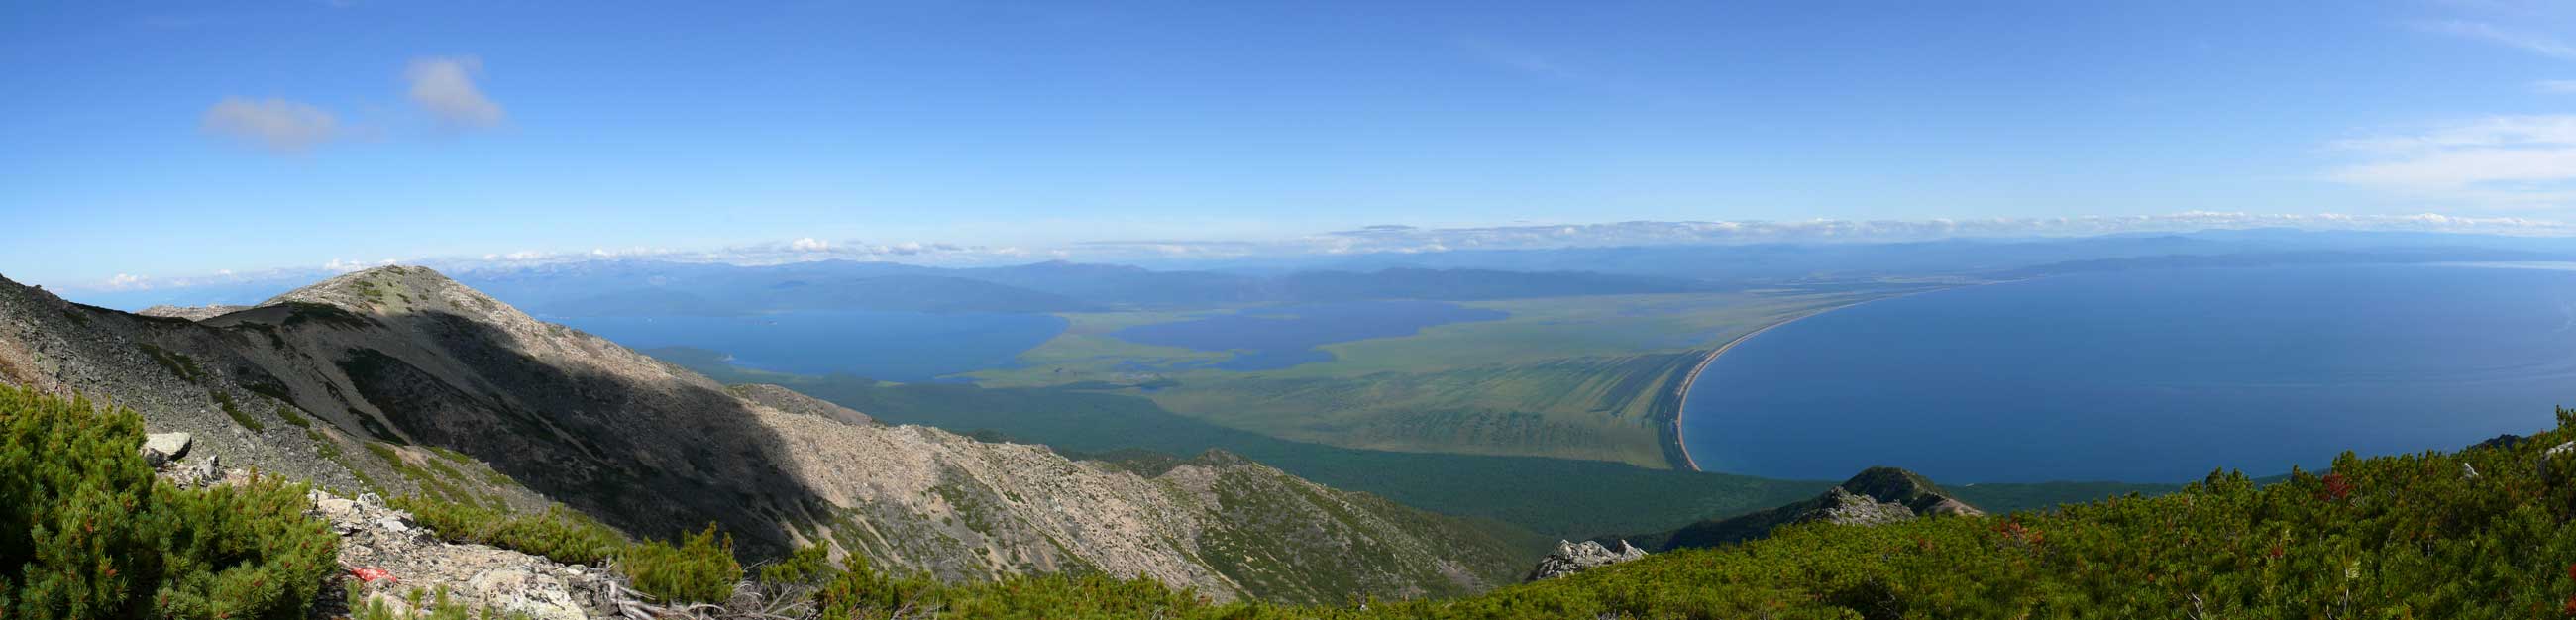 Панорамы Святой нос Байкал